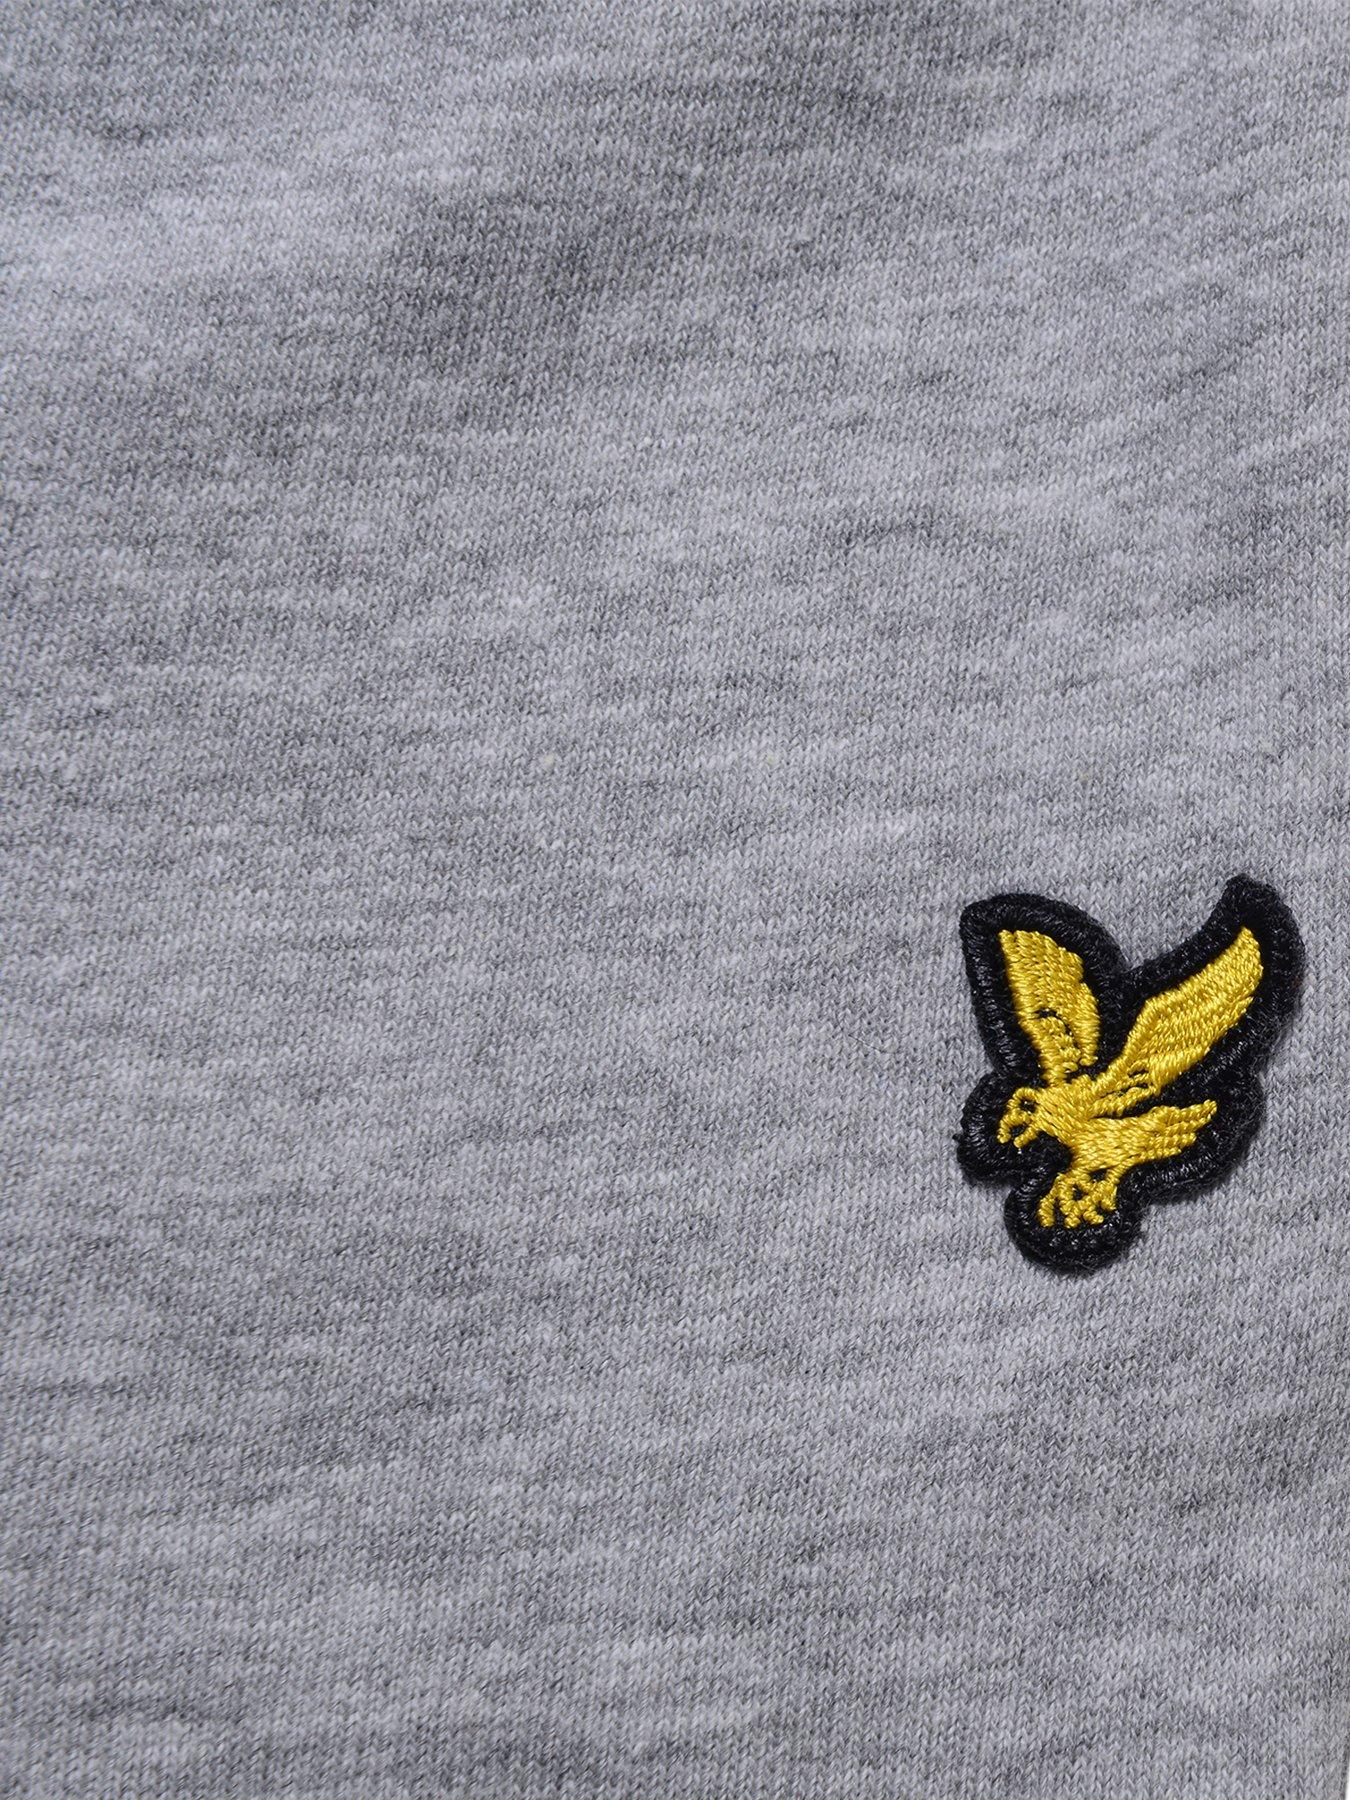 Kids Toddler Boys Eagle Logo T-shirt & Short Set - Navy Blazer